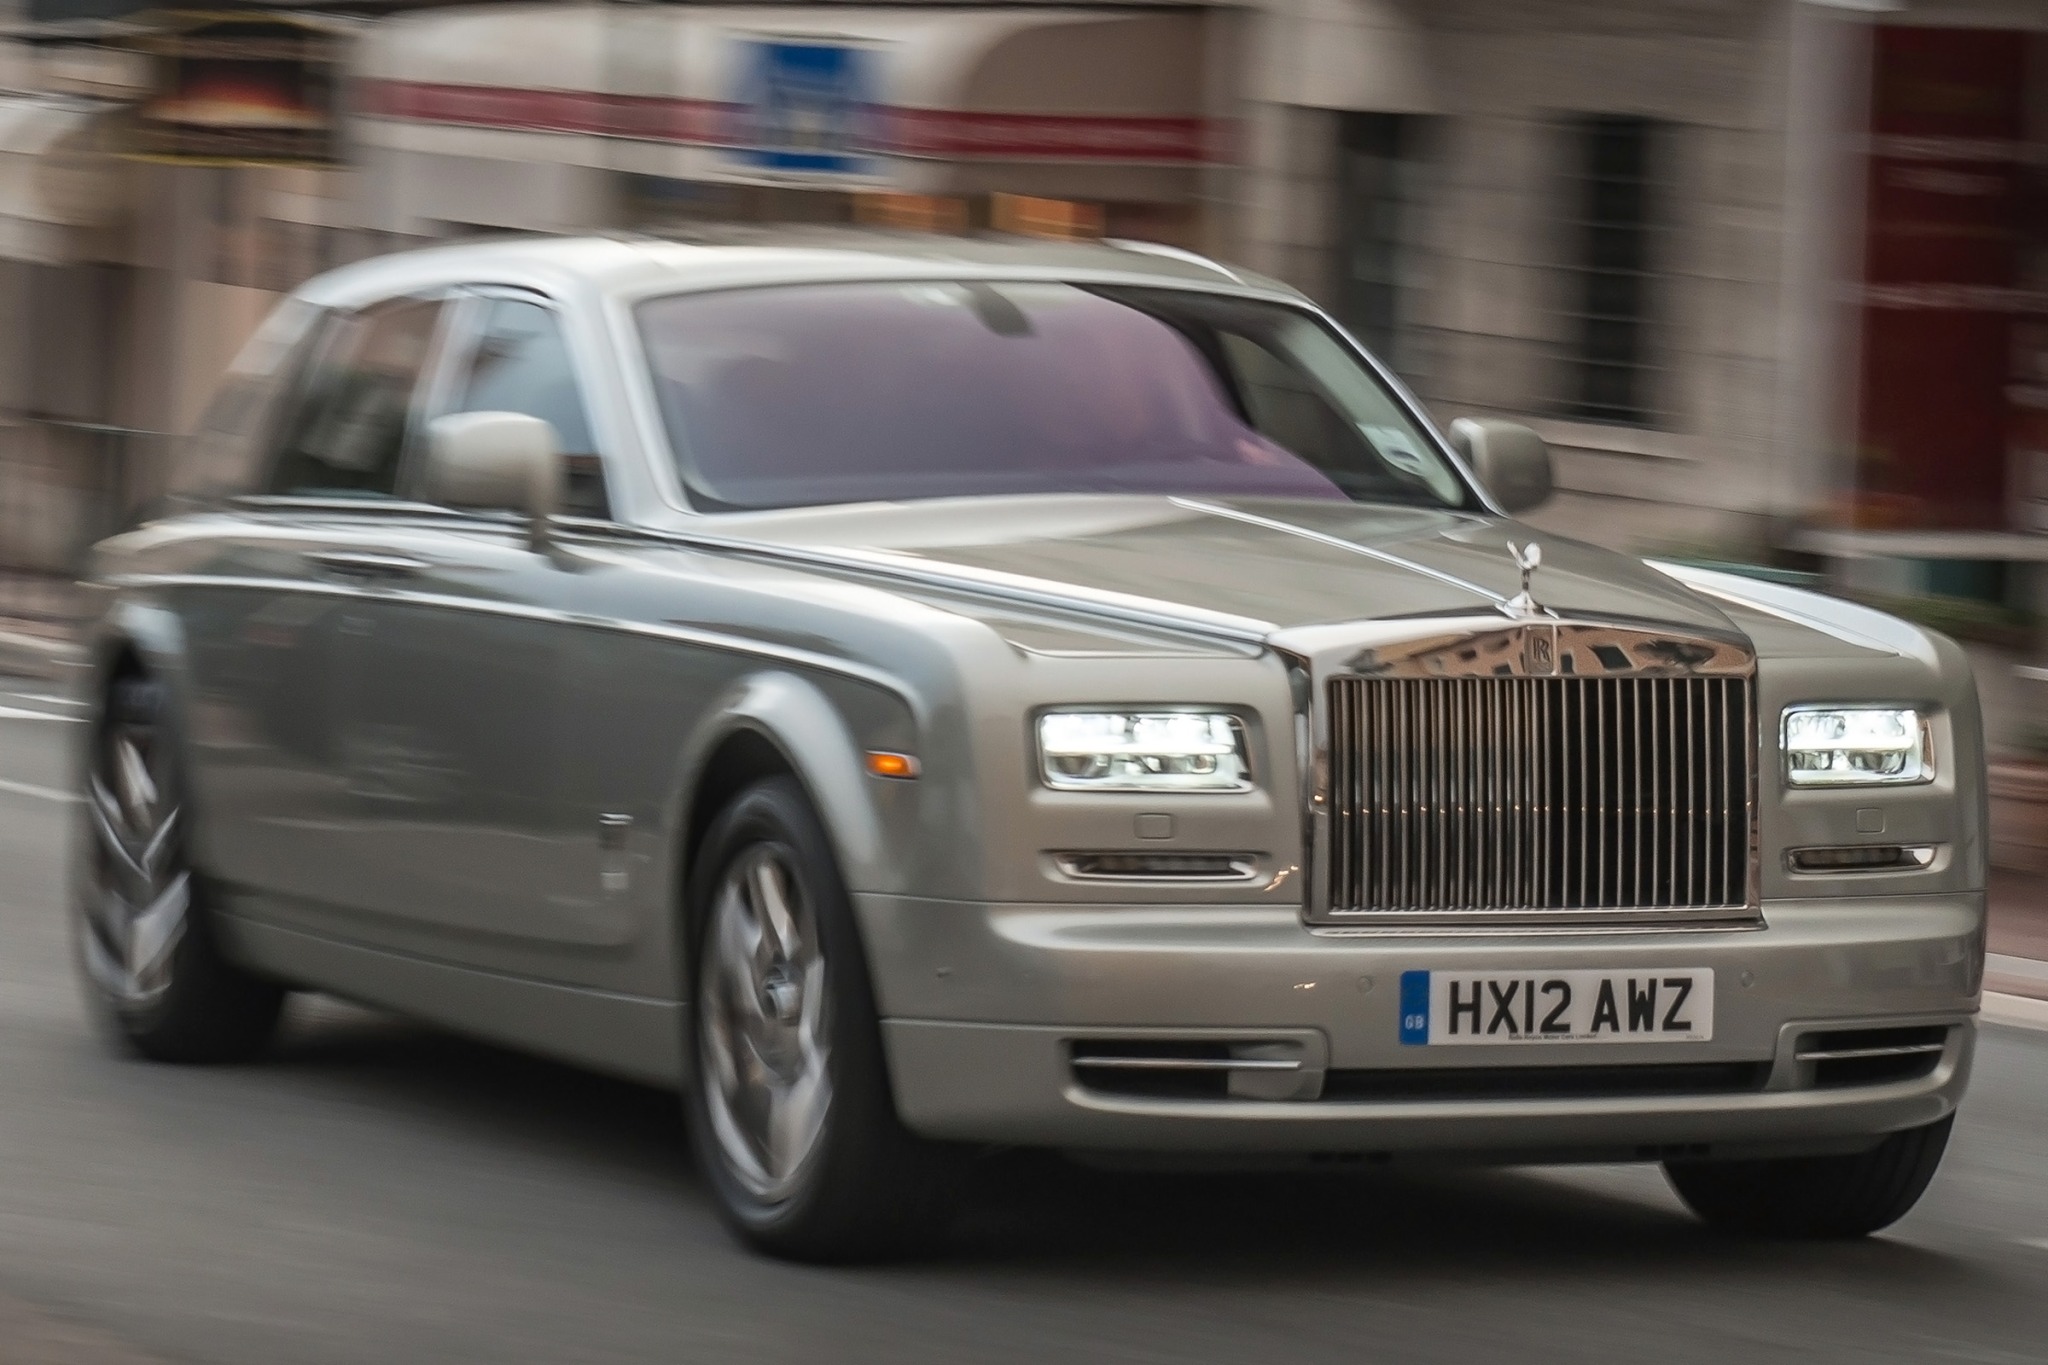 2013 Rolls-Royce Phantom VIN Number Search - AutoDetective